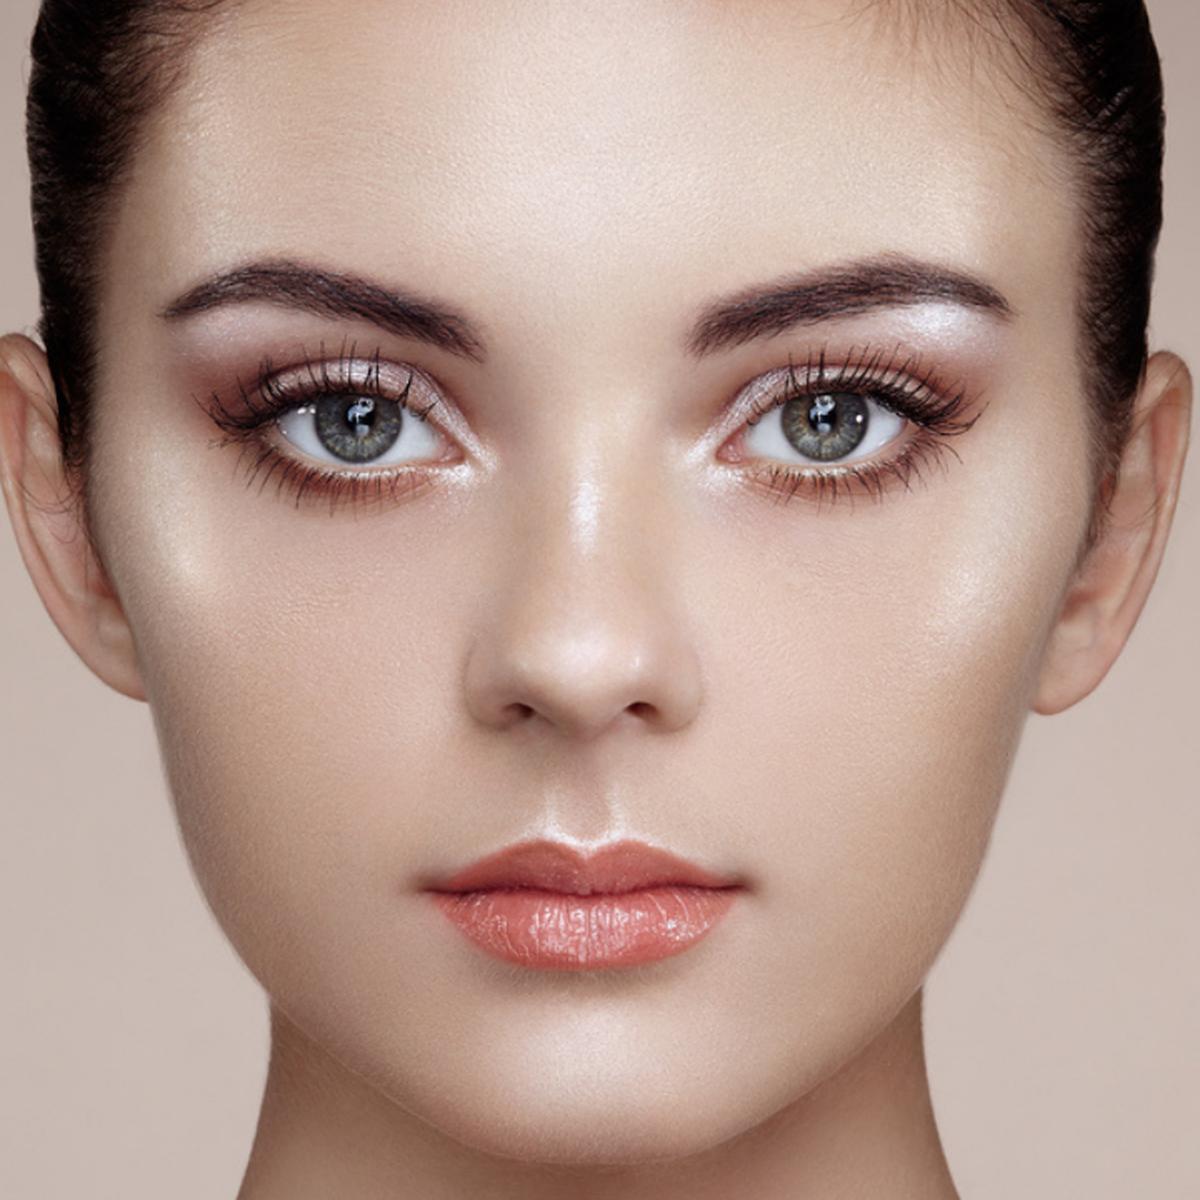 Strobing: Técnica de maquillaje para iluminar el rostro web ojo | MUJER |  OJO